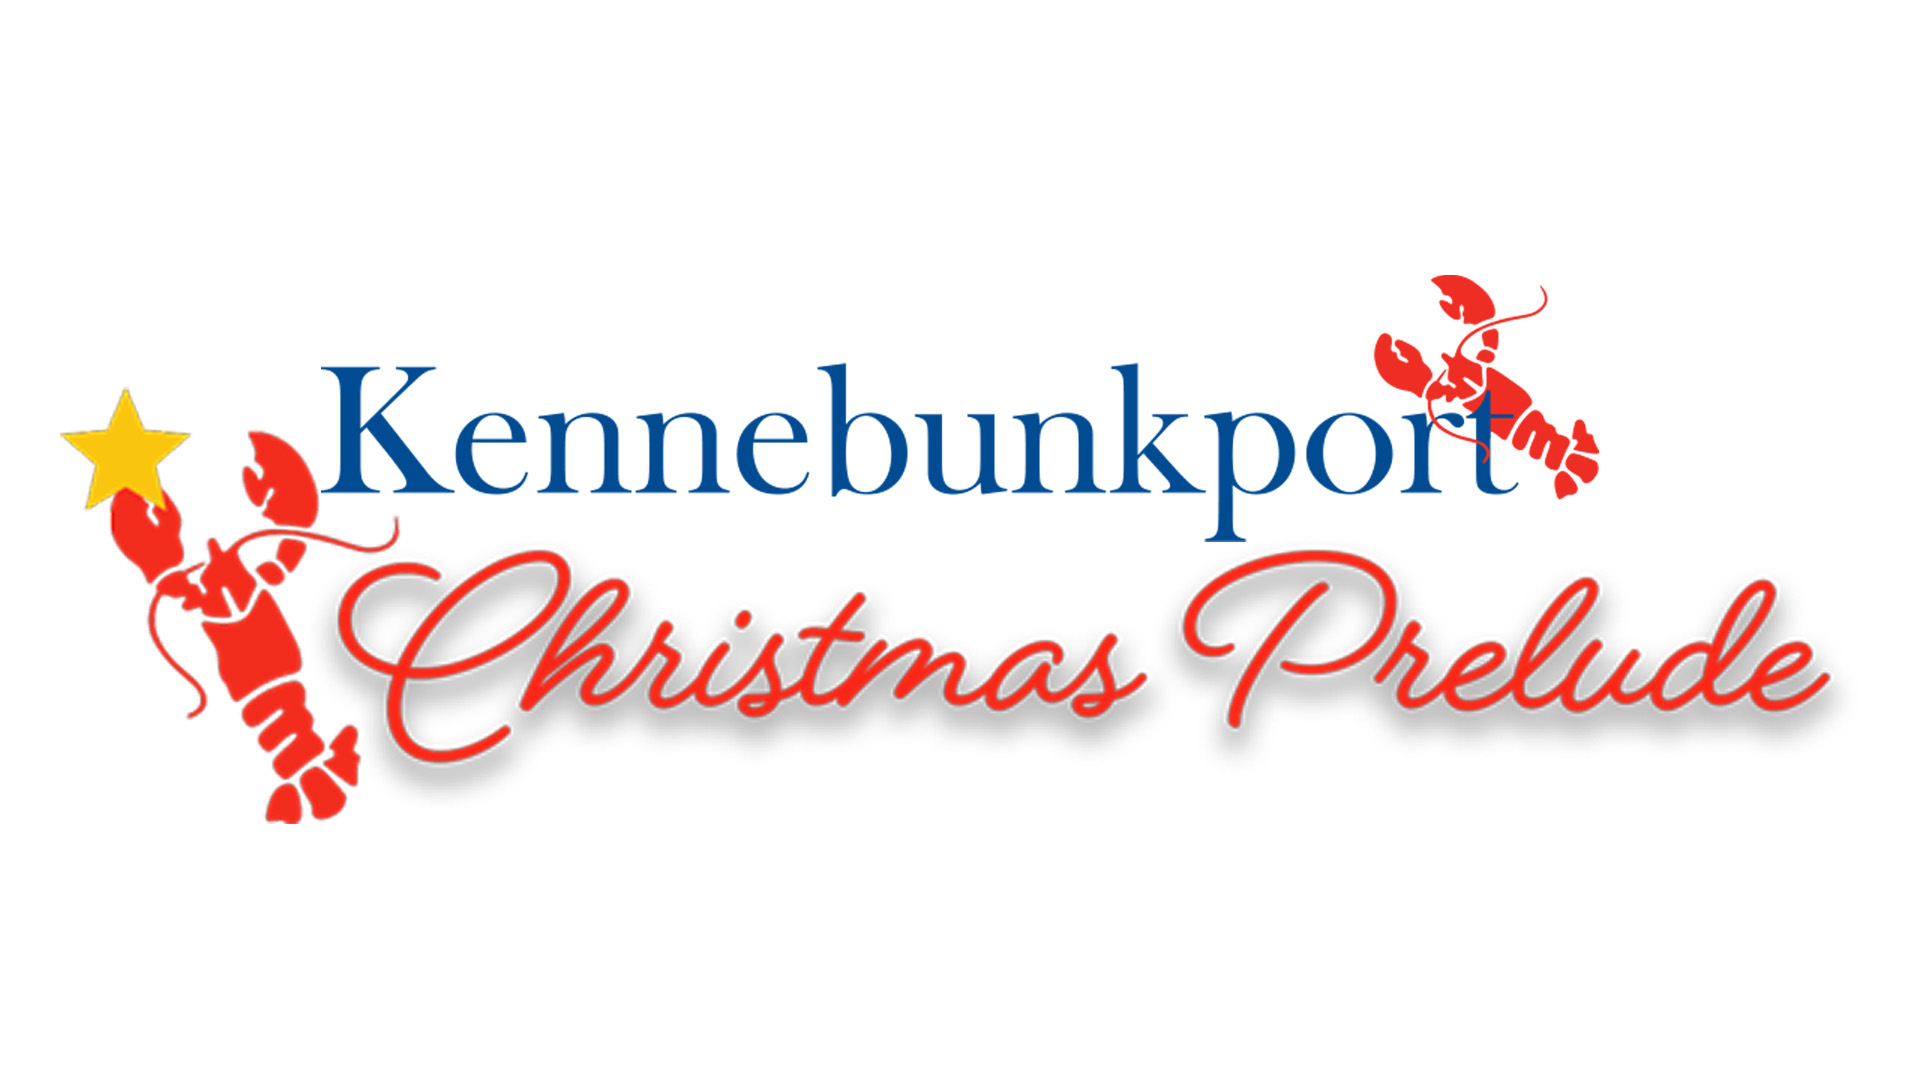 Kennebunkport Christmas Prelude